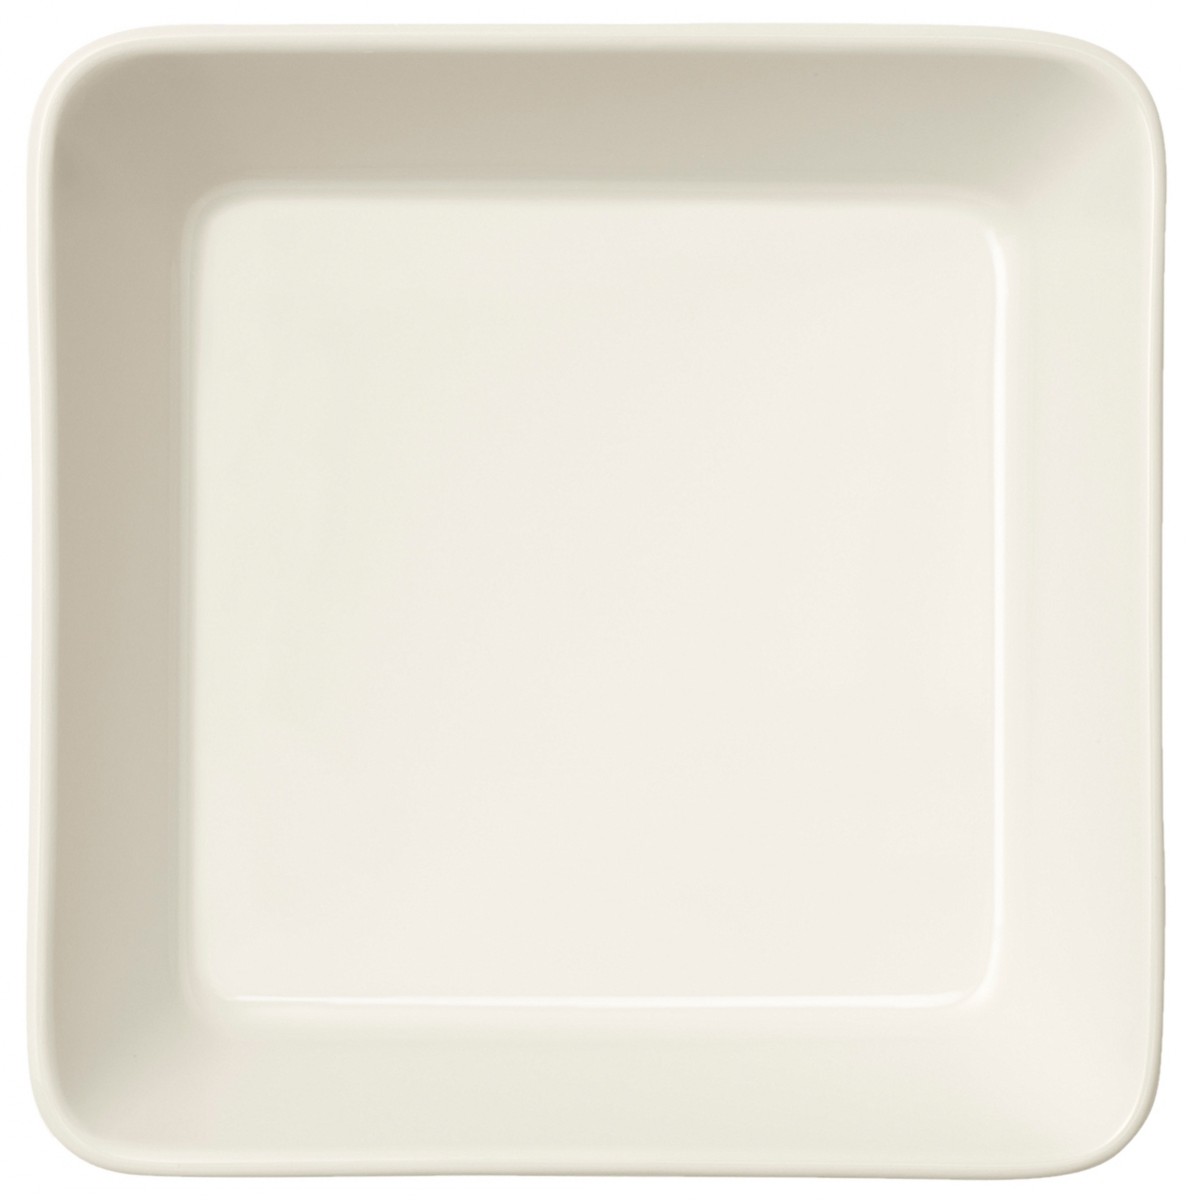 16x16cm - Teema square dish - white - 1005929